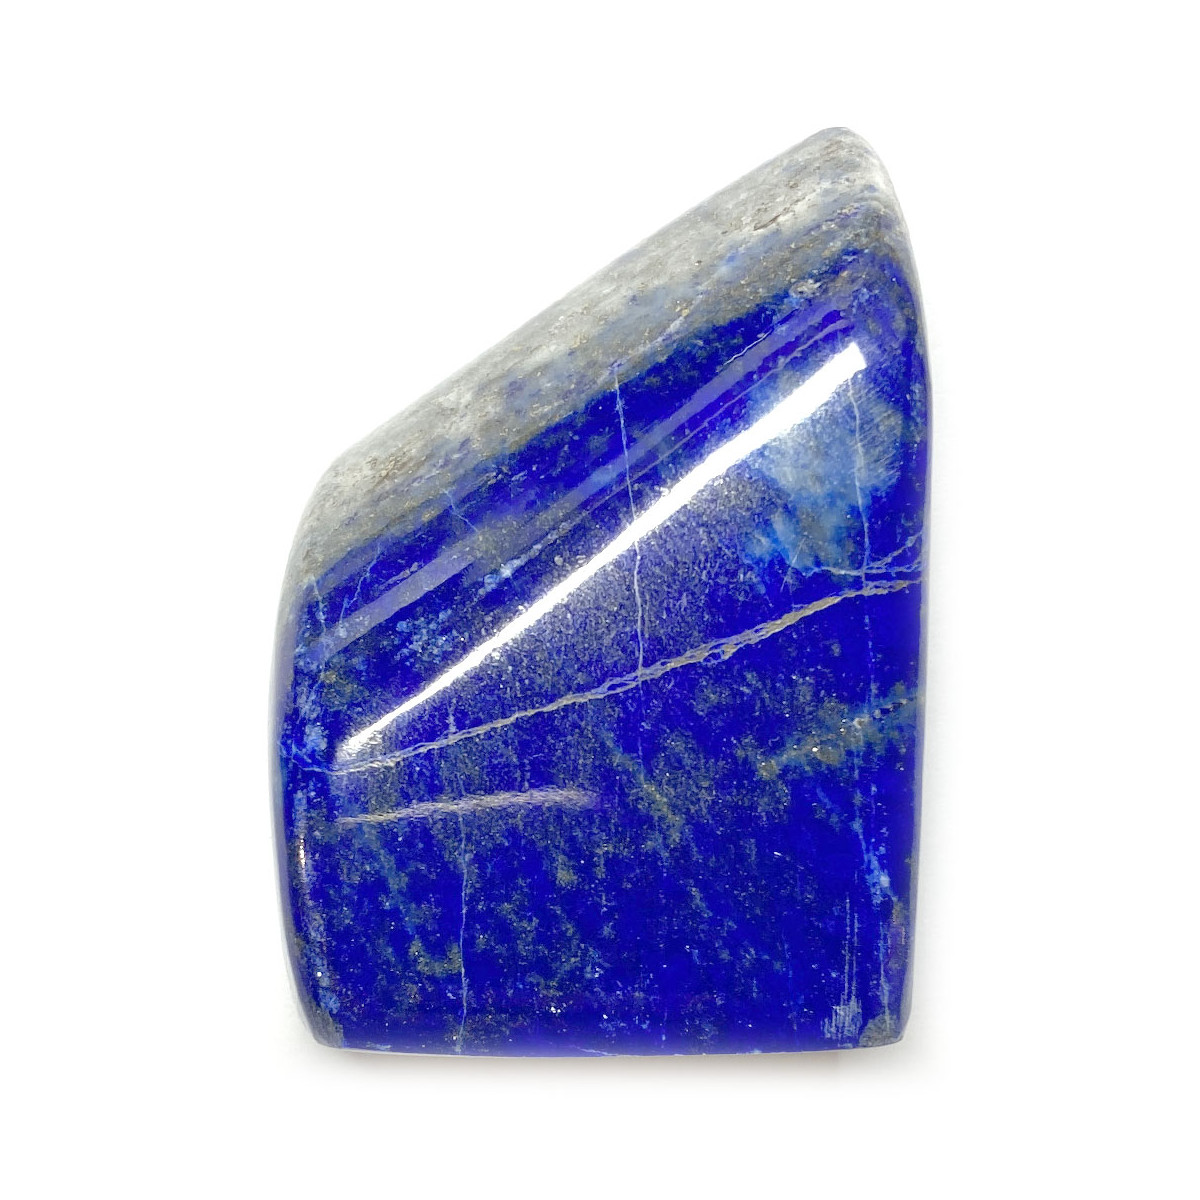 Petite Forme libre en Lapis-Lazuli